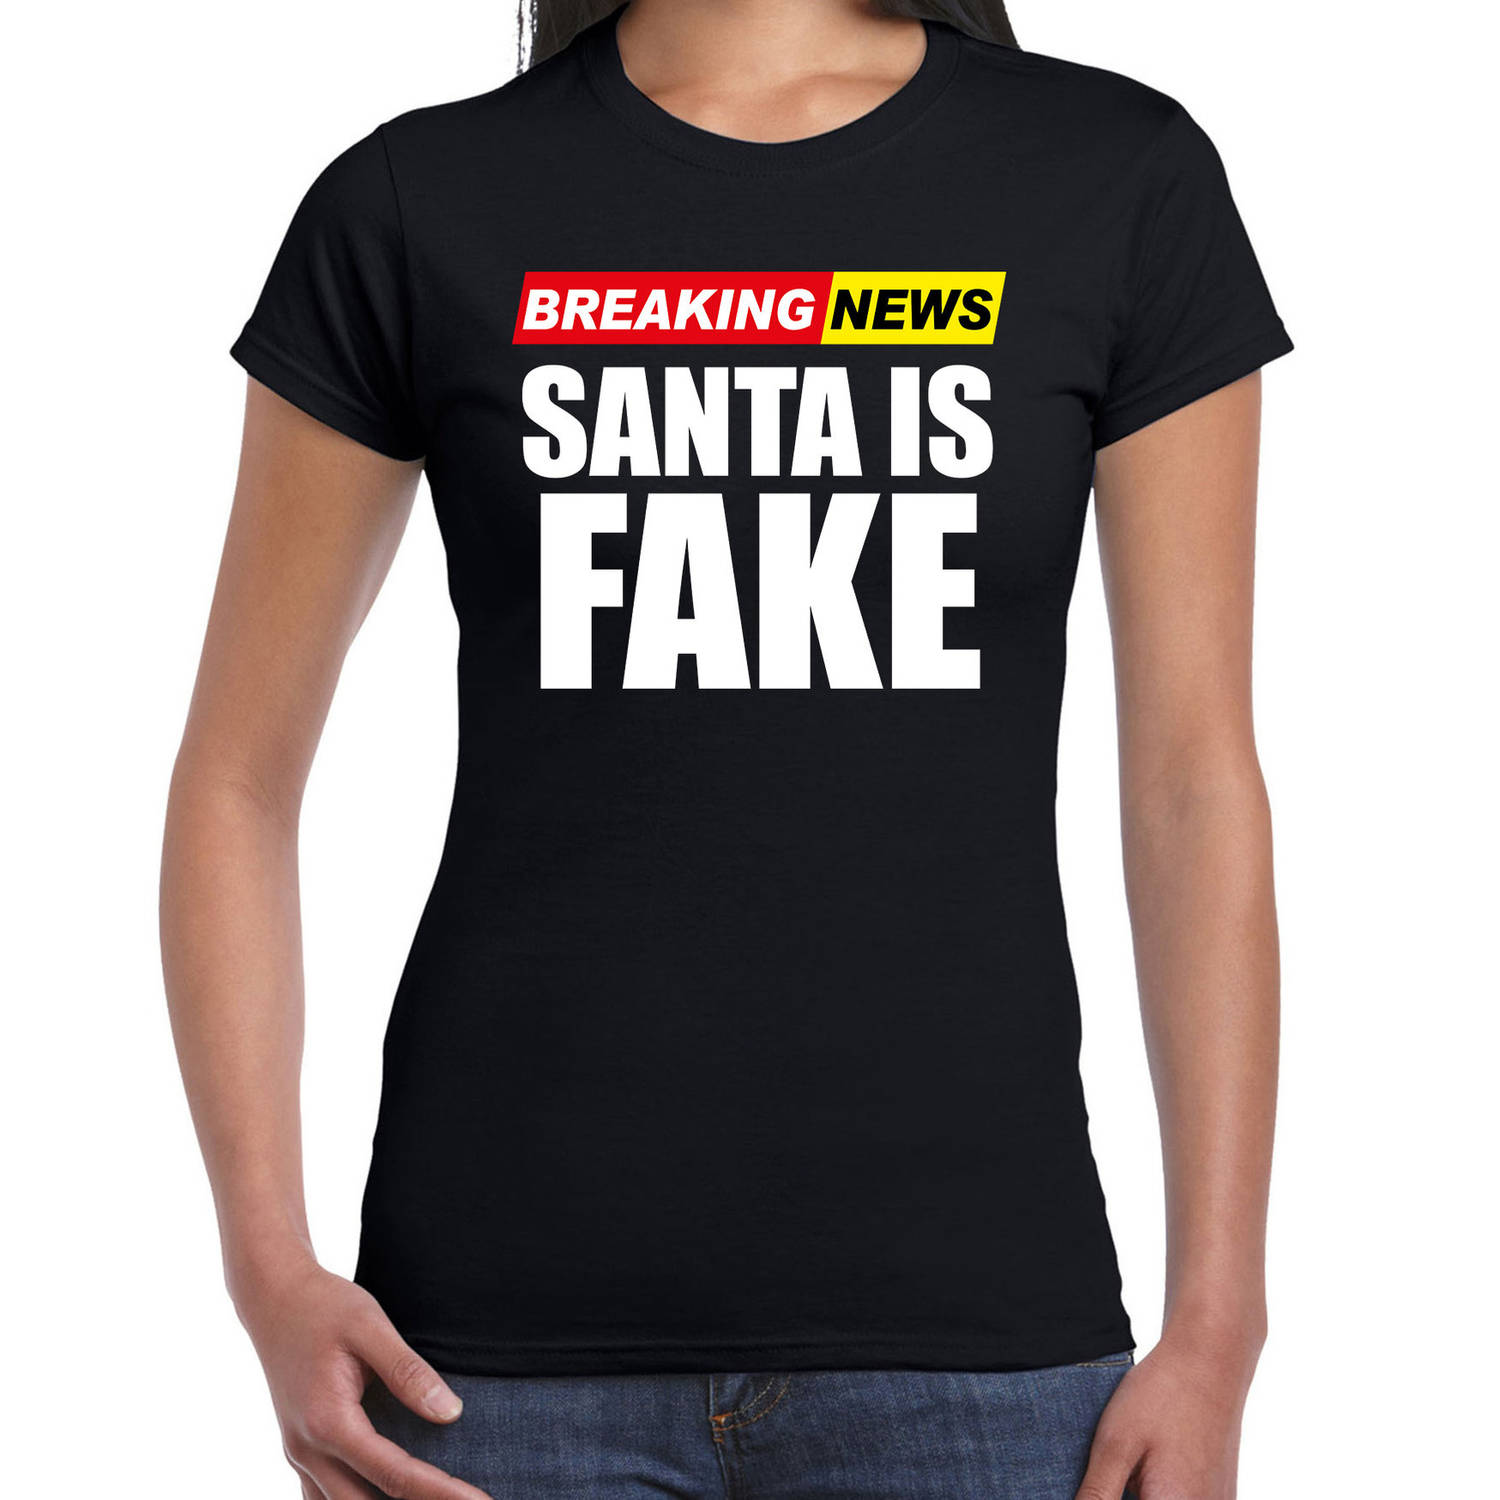 Fout humor Kerst T-shirt breaking news fake voor dames zwart S - kerst t-shirts